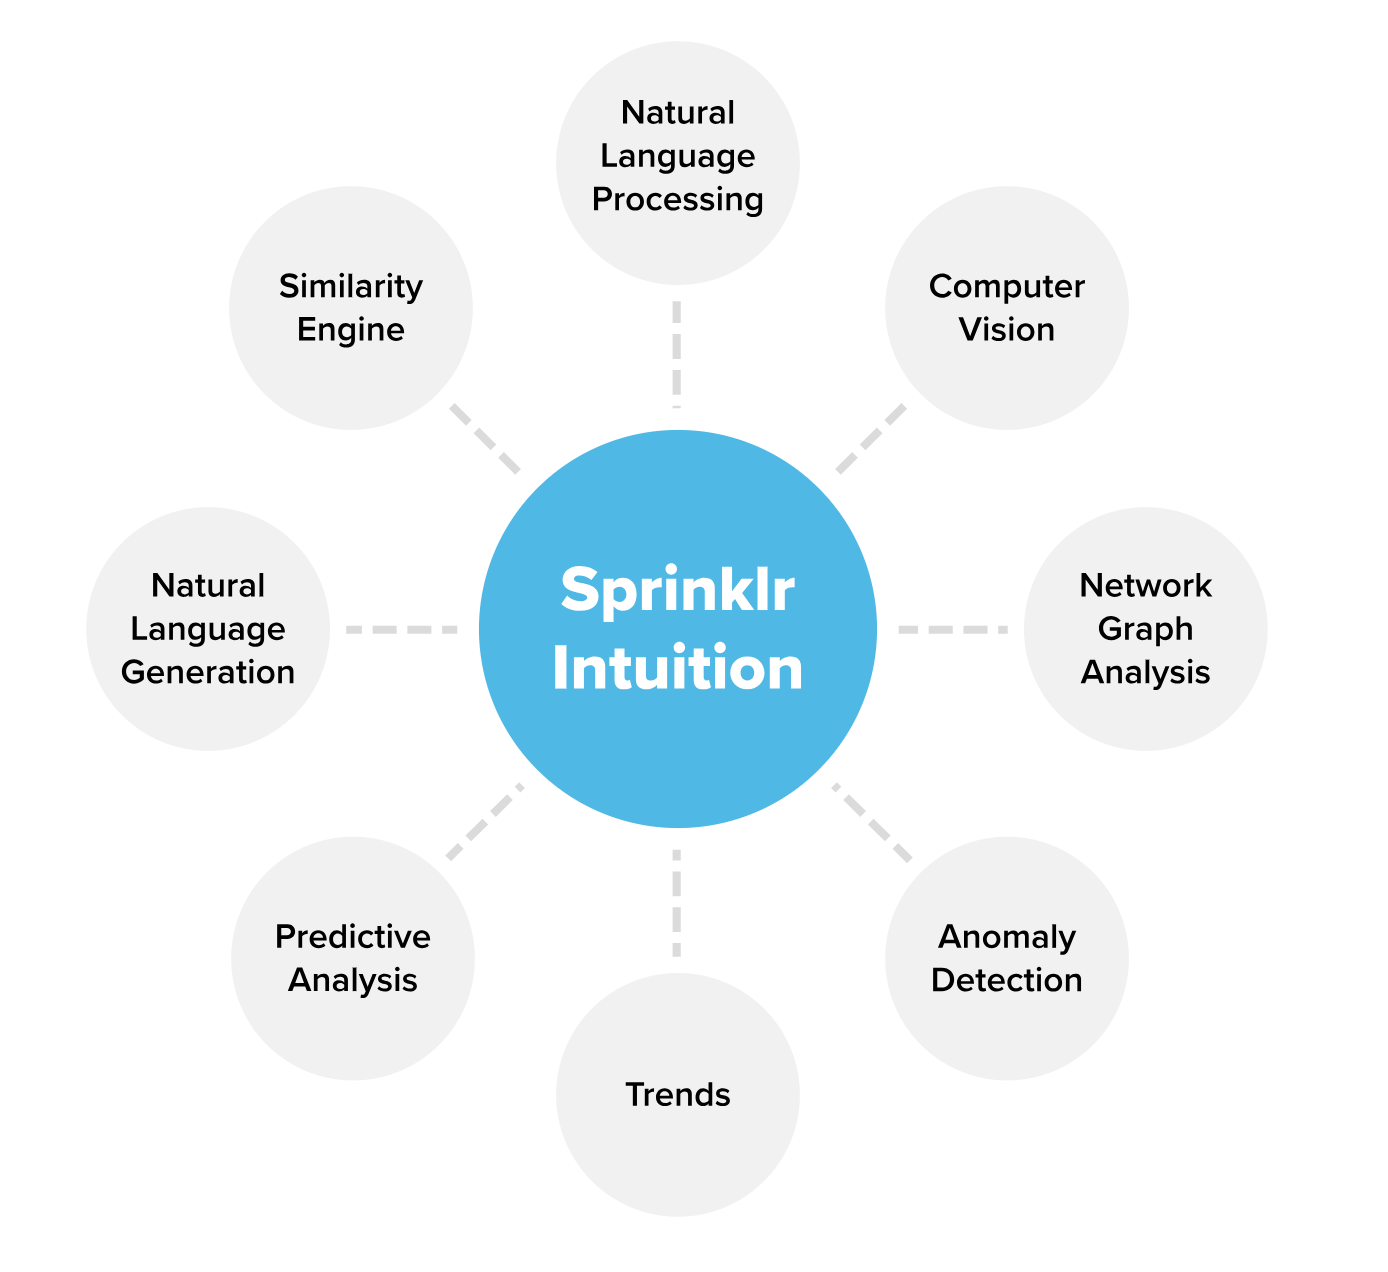 Sprinklr social media management tool AI capabilities